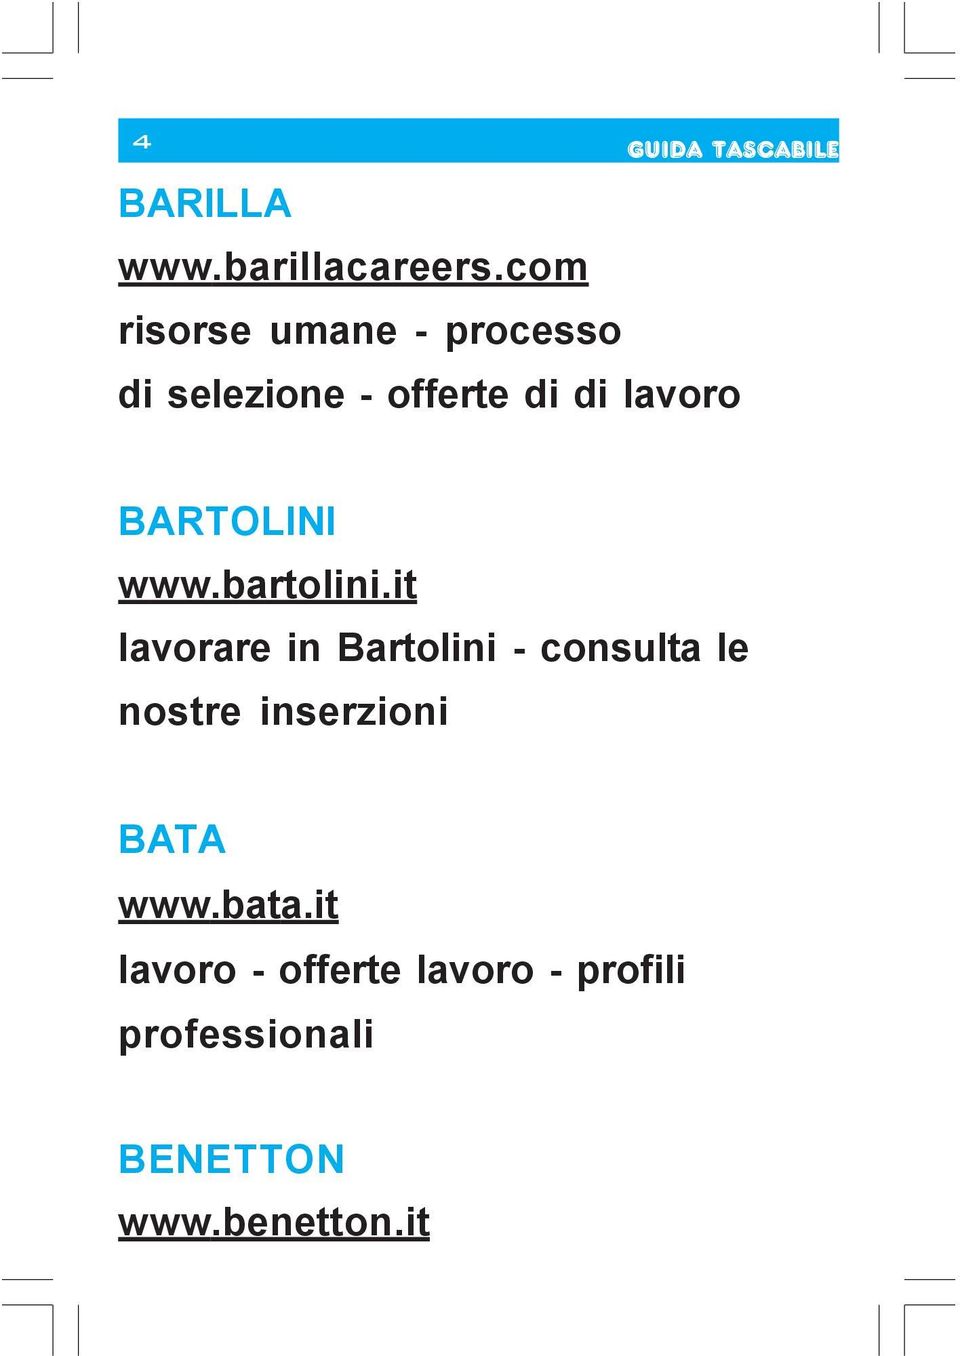 BARTOLINI www.bartolini.